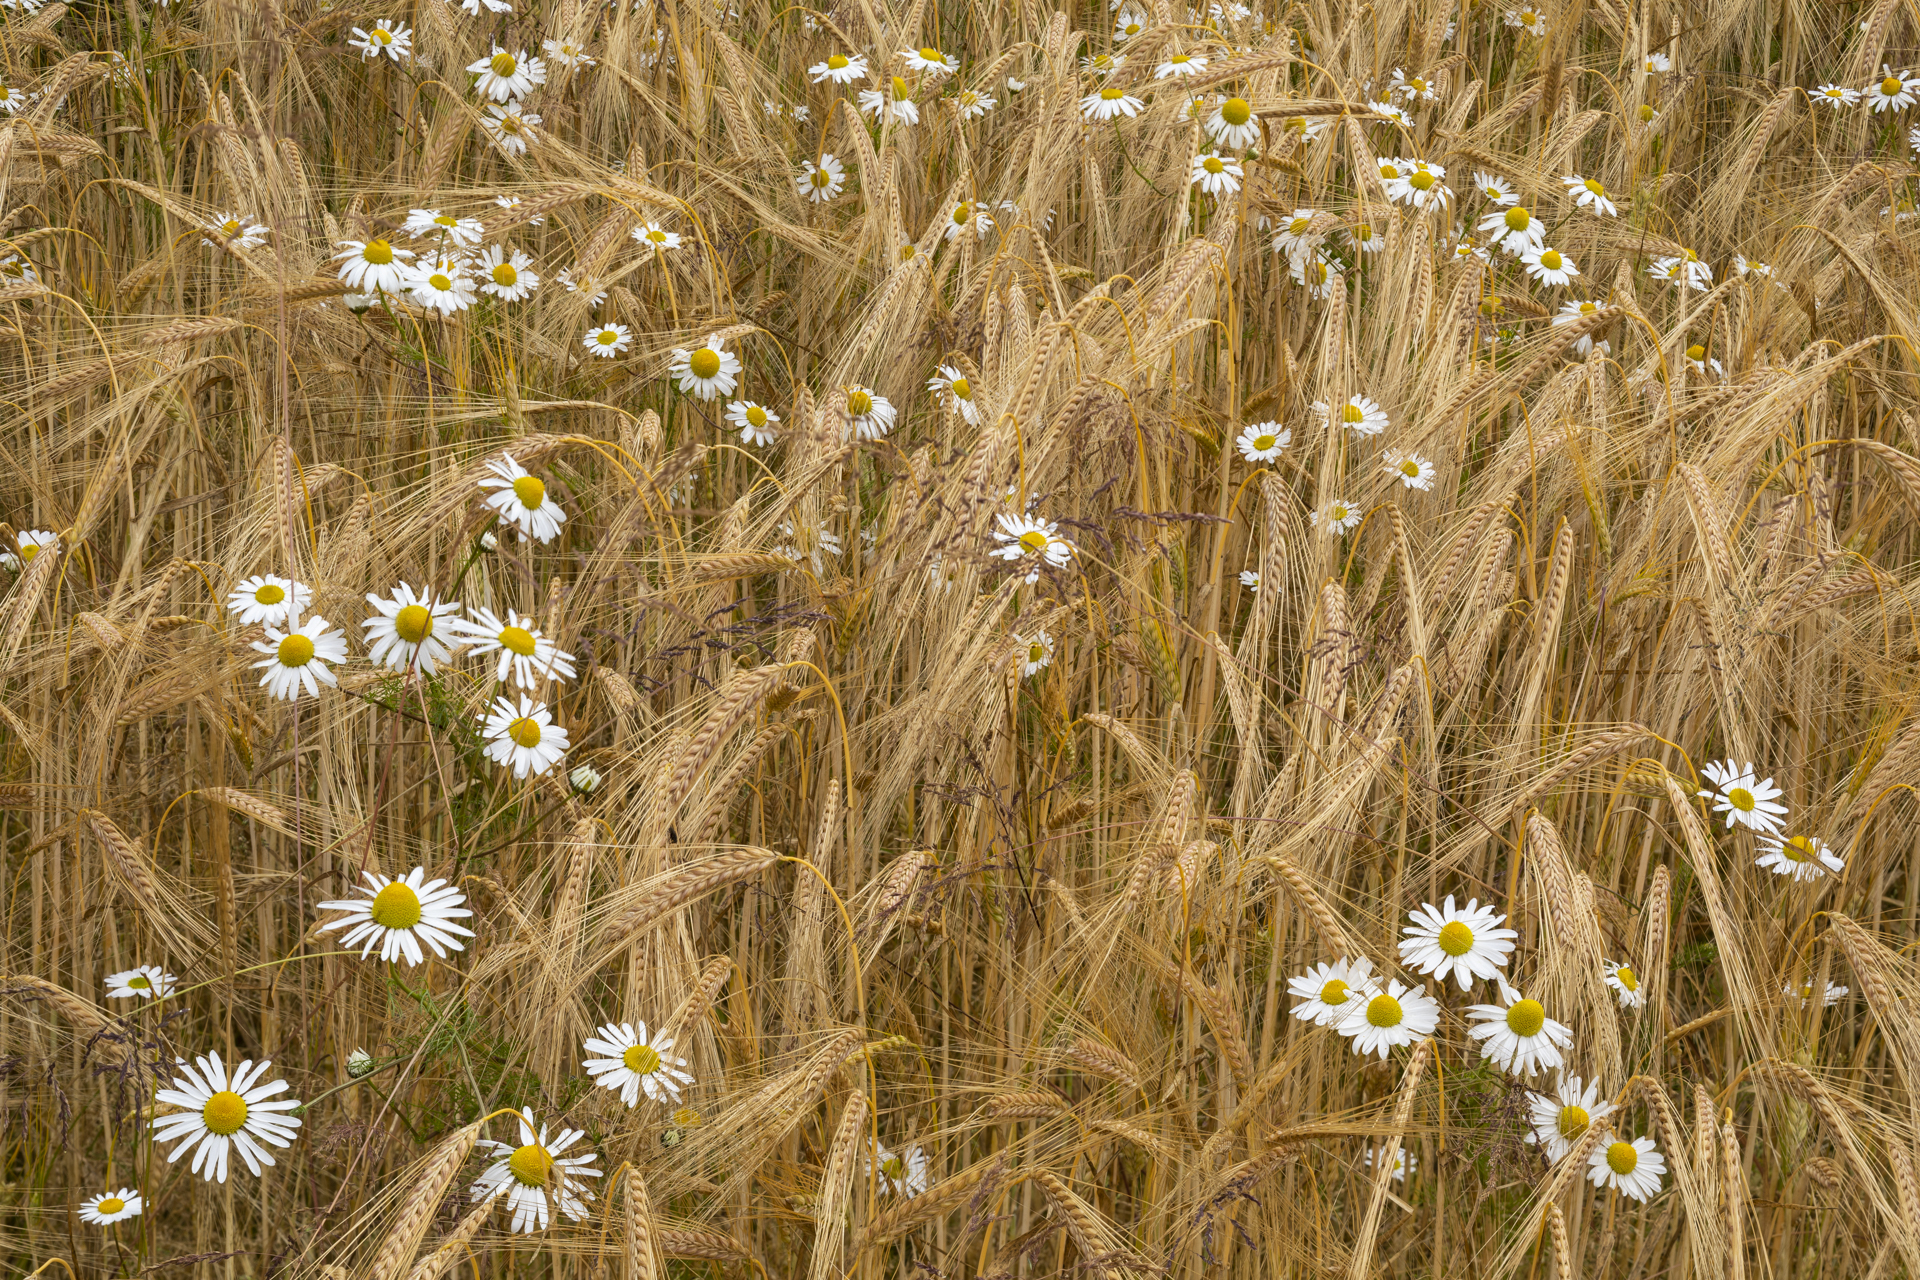 Giant Daisy (Leucanthemella serotina) and Barley, Main of Bridgeton, Scotland